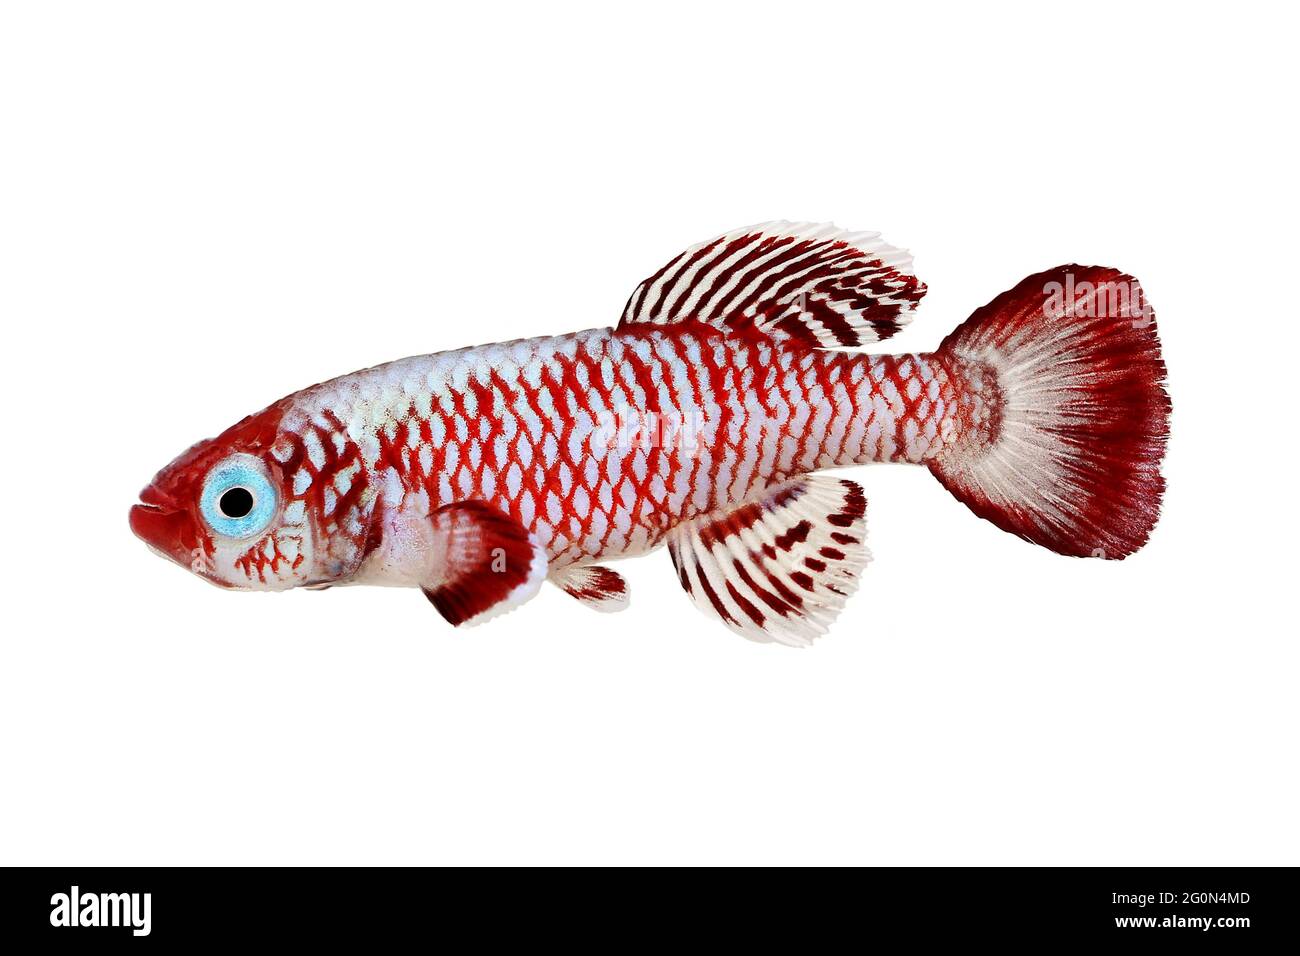 Red eggersi killifish aquarium fish Nothobranchius eggersi Stock Photo